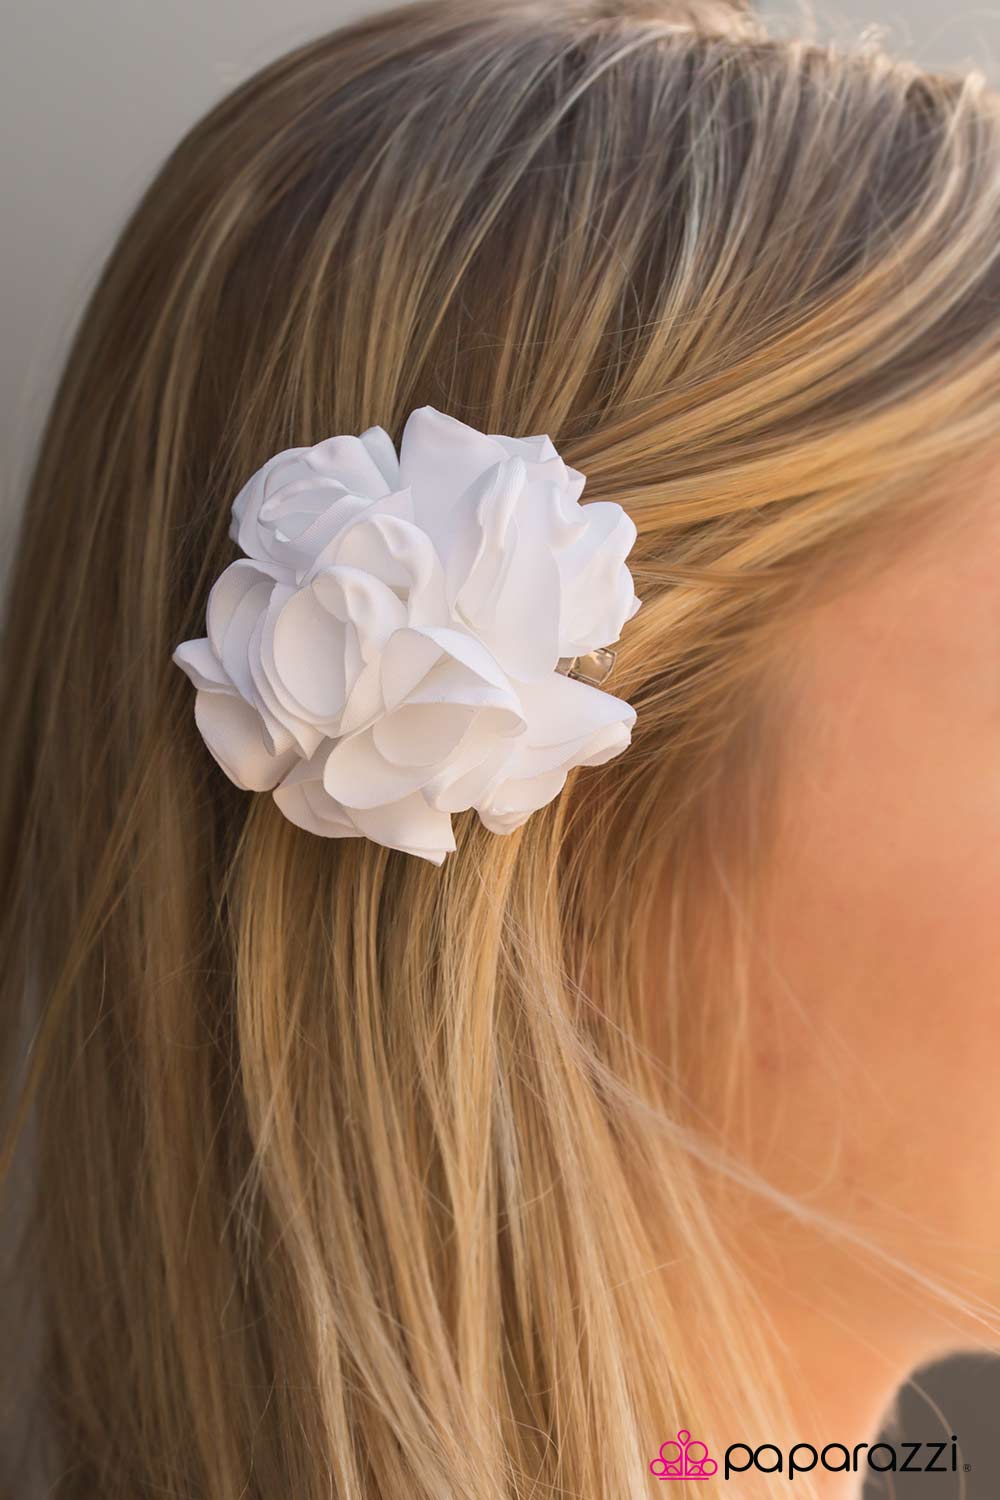 small white flower hair accessories